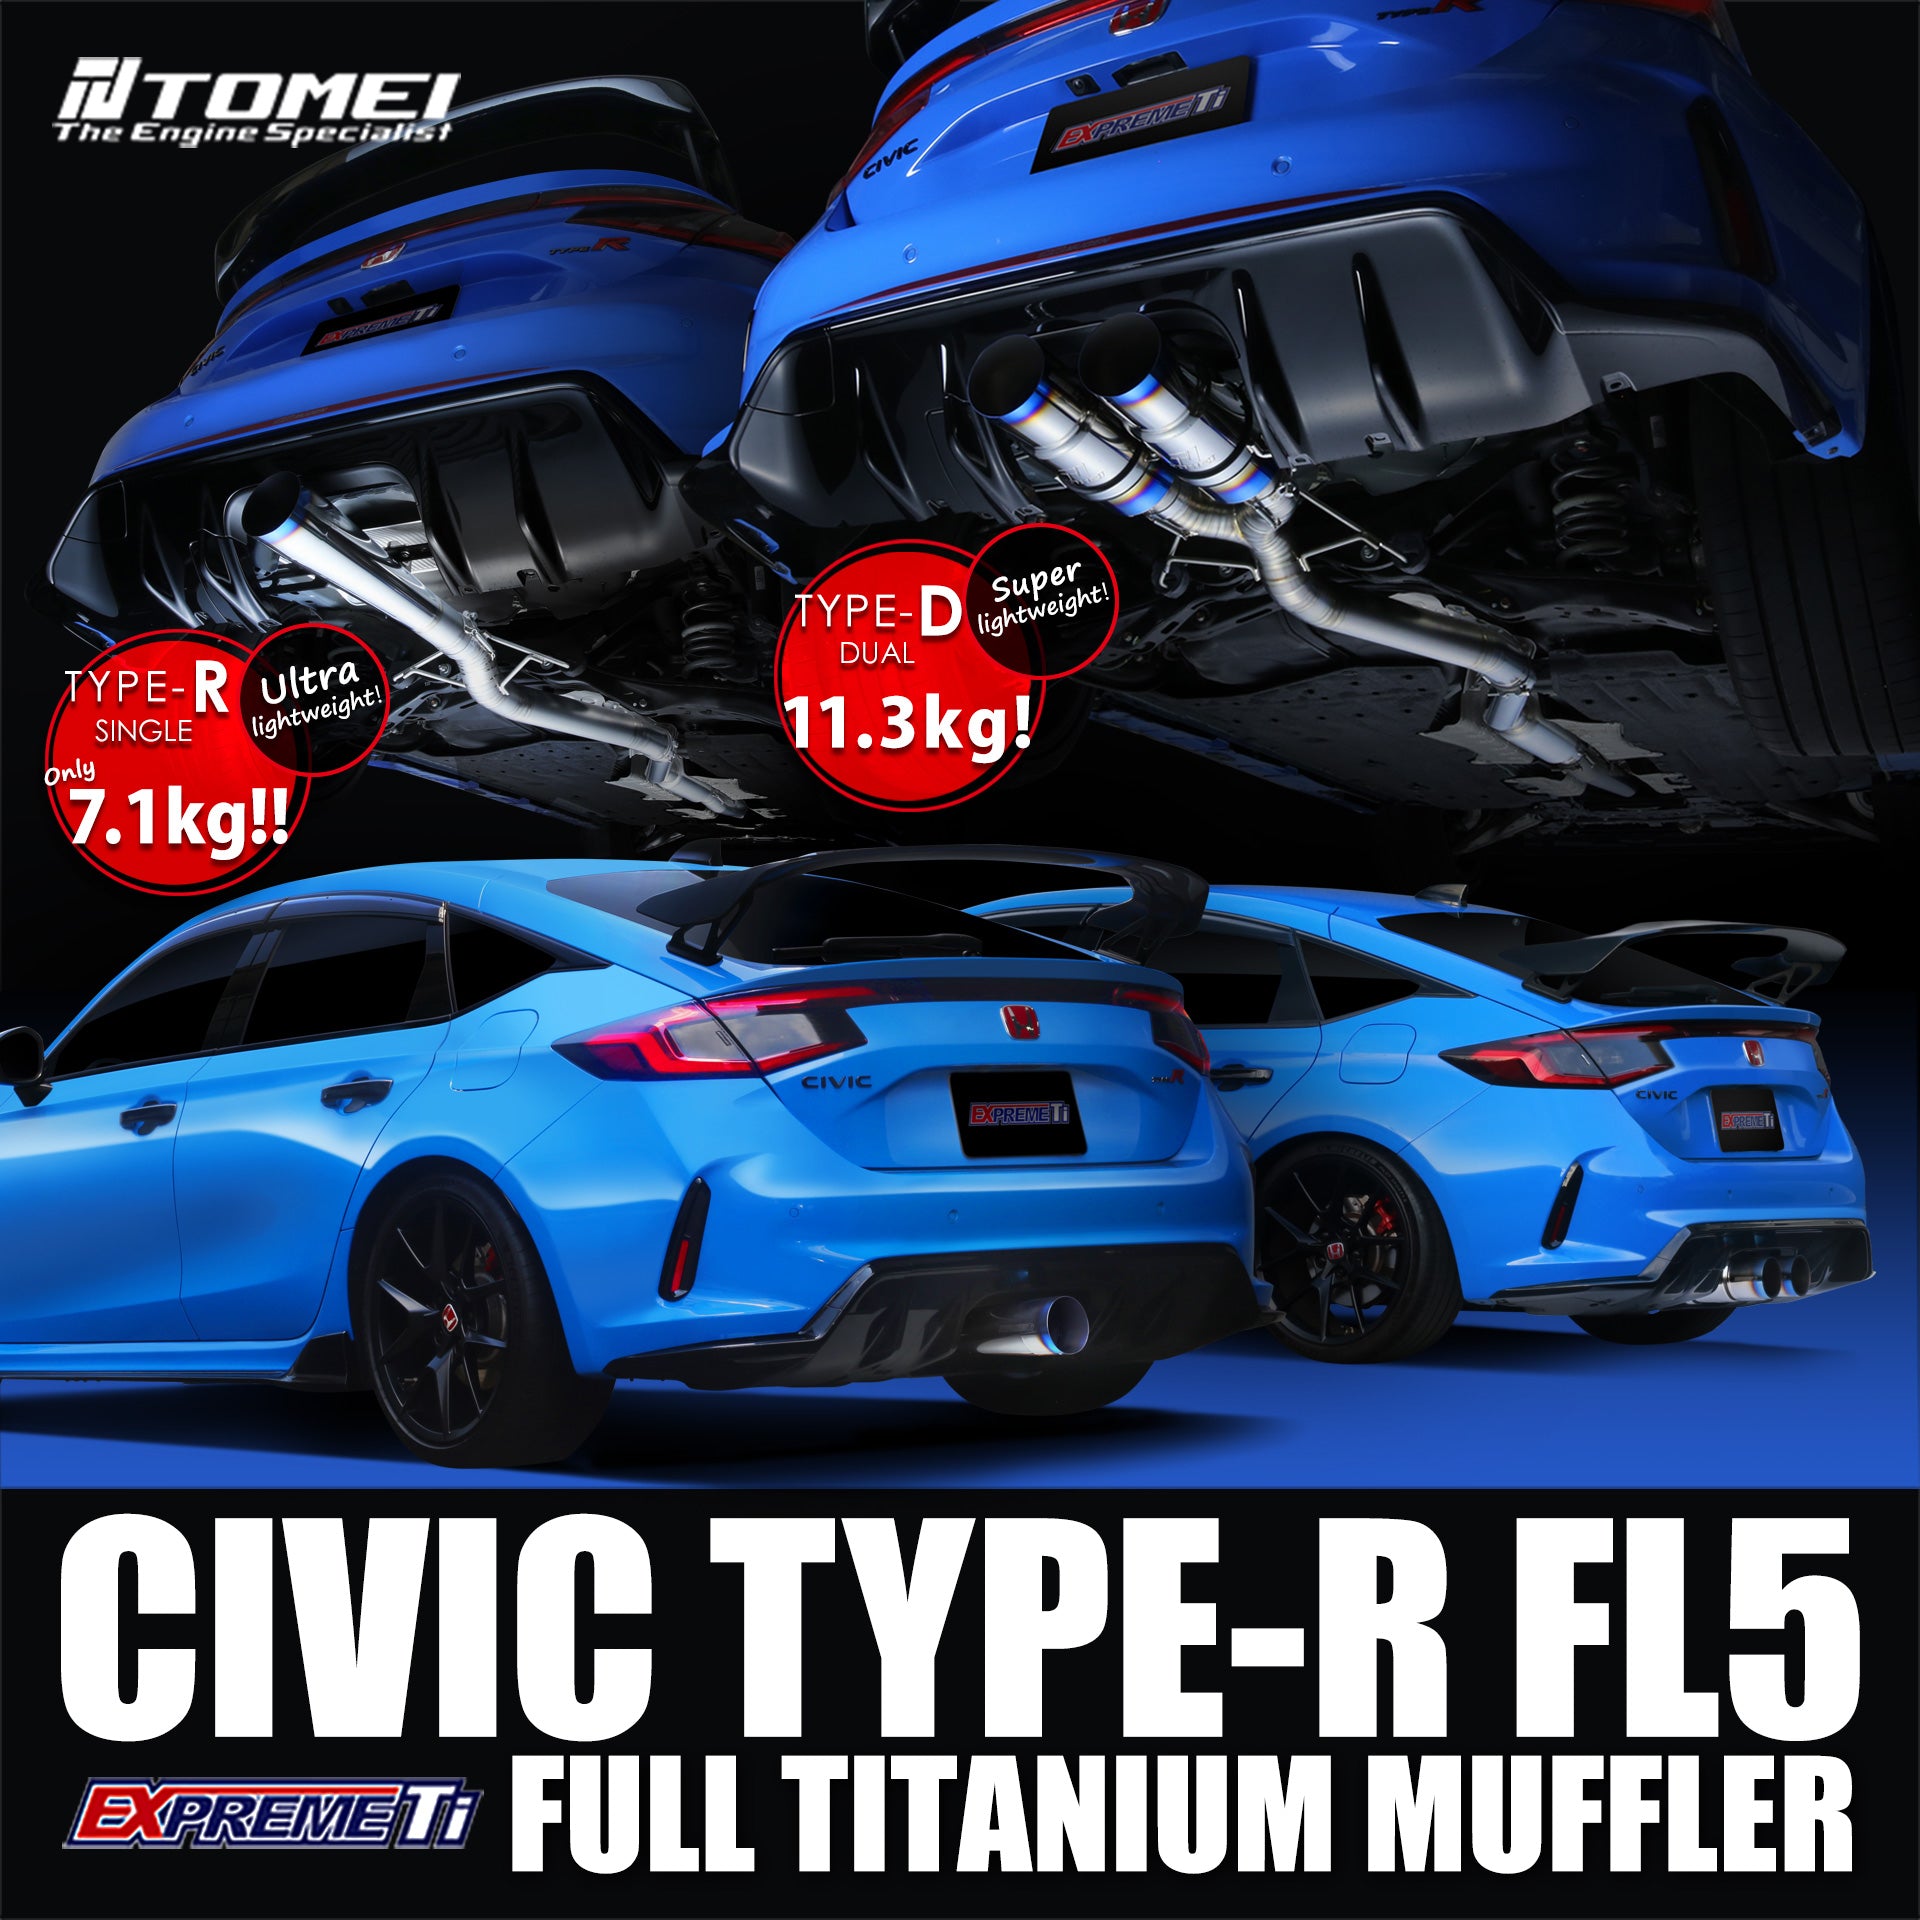 Tomei Full Titanium Muffler (Civic Type-R FL5)